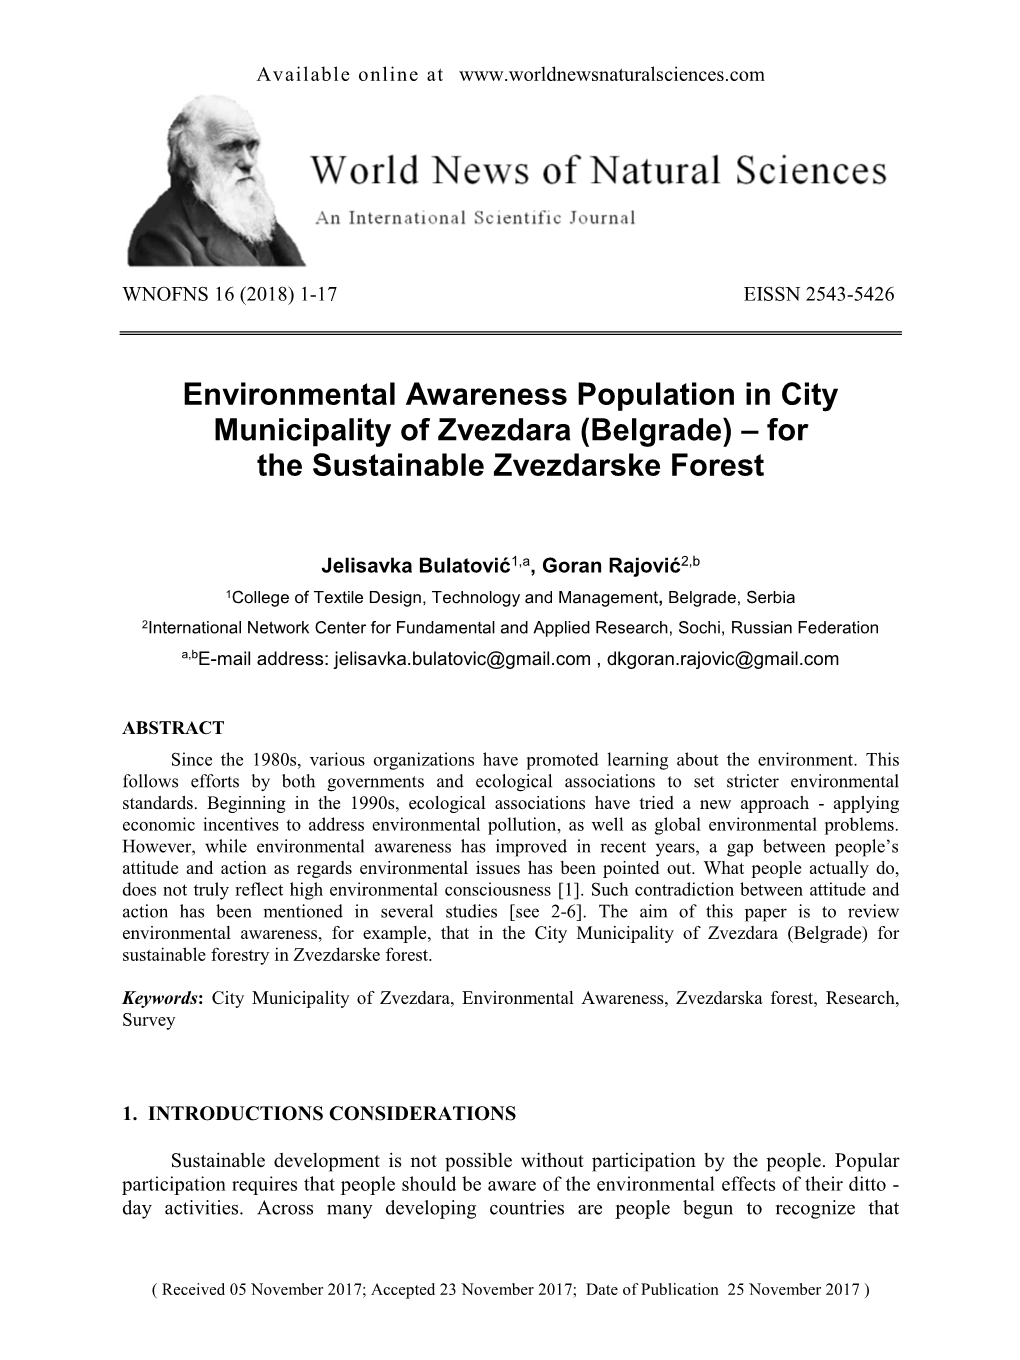 Environmental Awareness Population in City Municipality of Zvezdara (Belgrade) – for the Sustainable Zvezdarske Forest